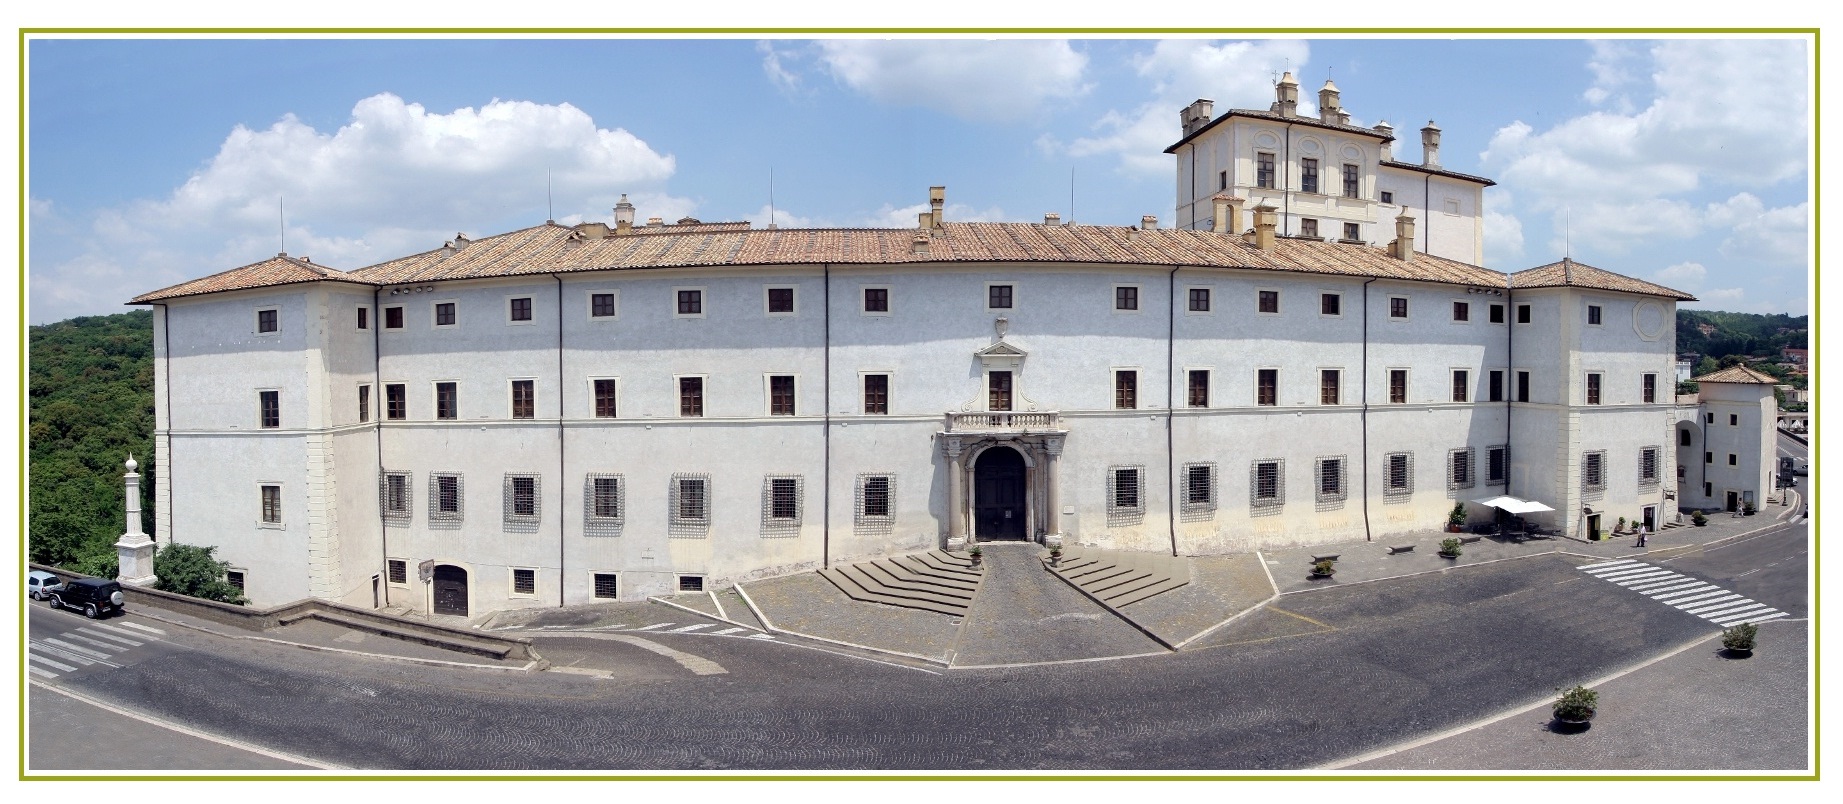 Ariccia-Palazzo-Chigi